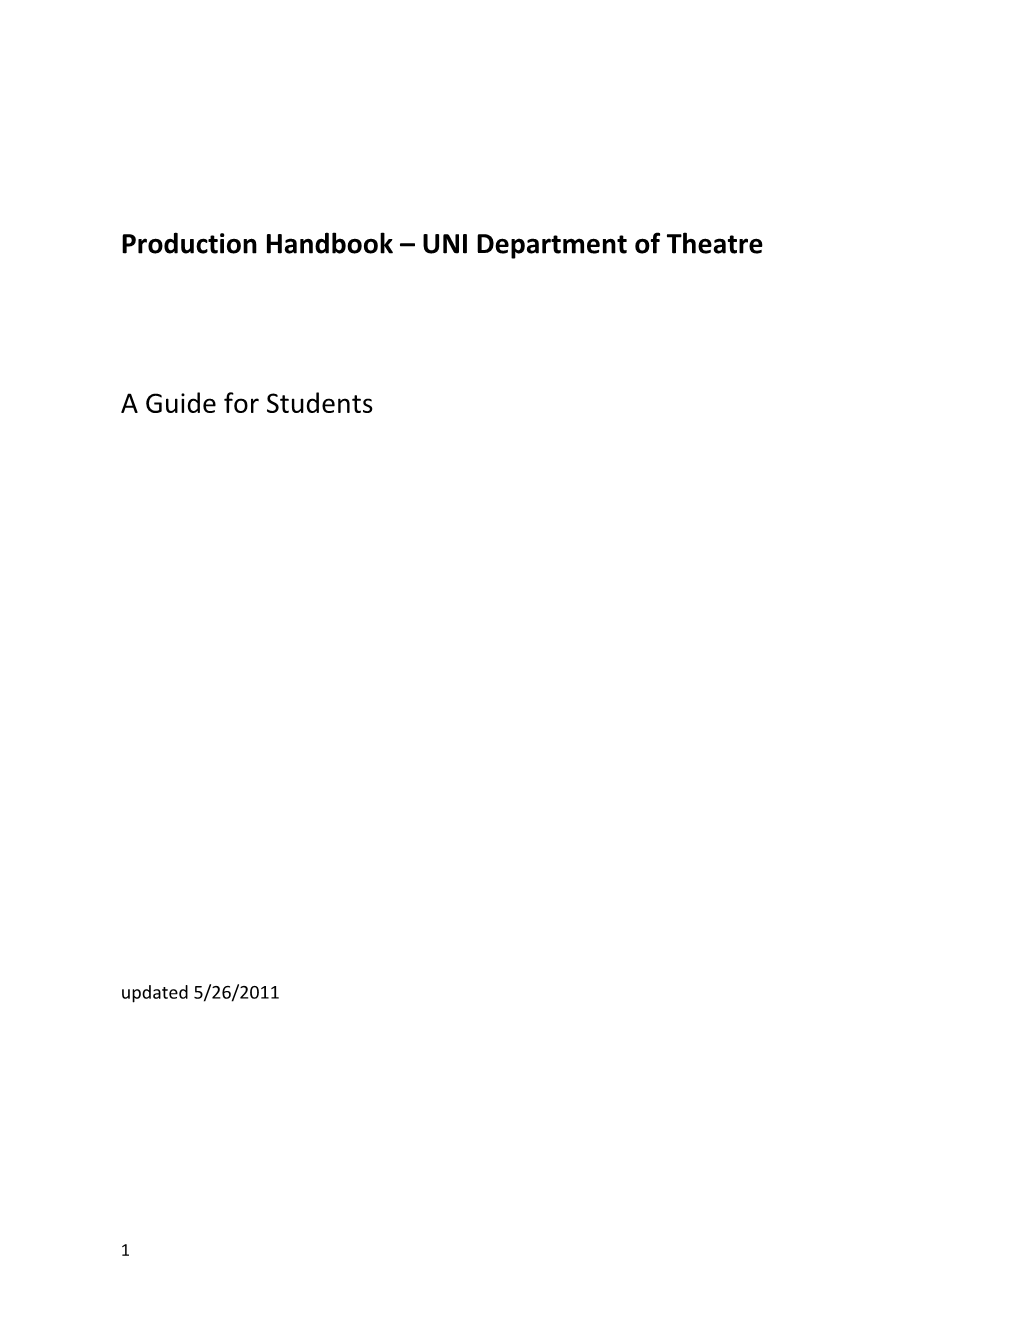 Production Handbook UNI Department of Theatre